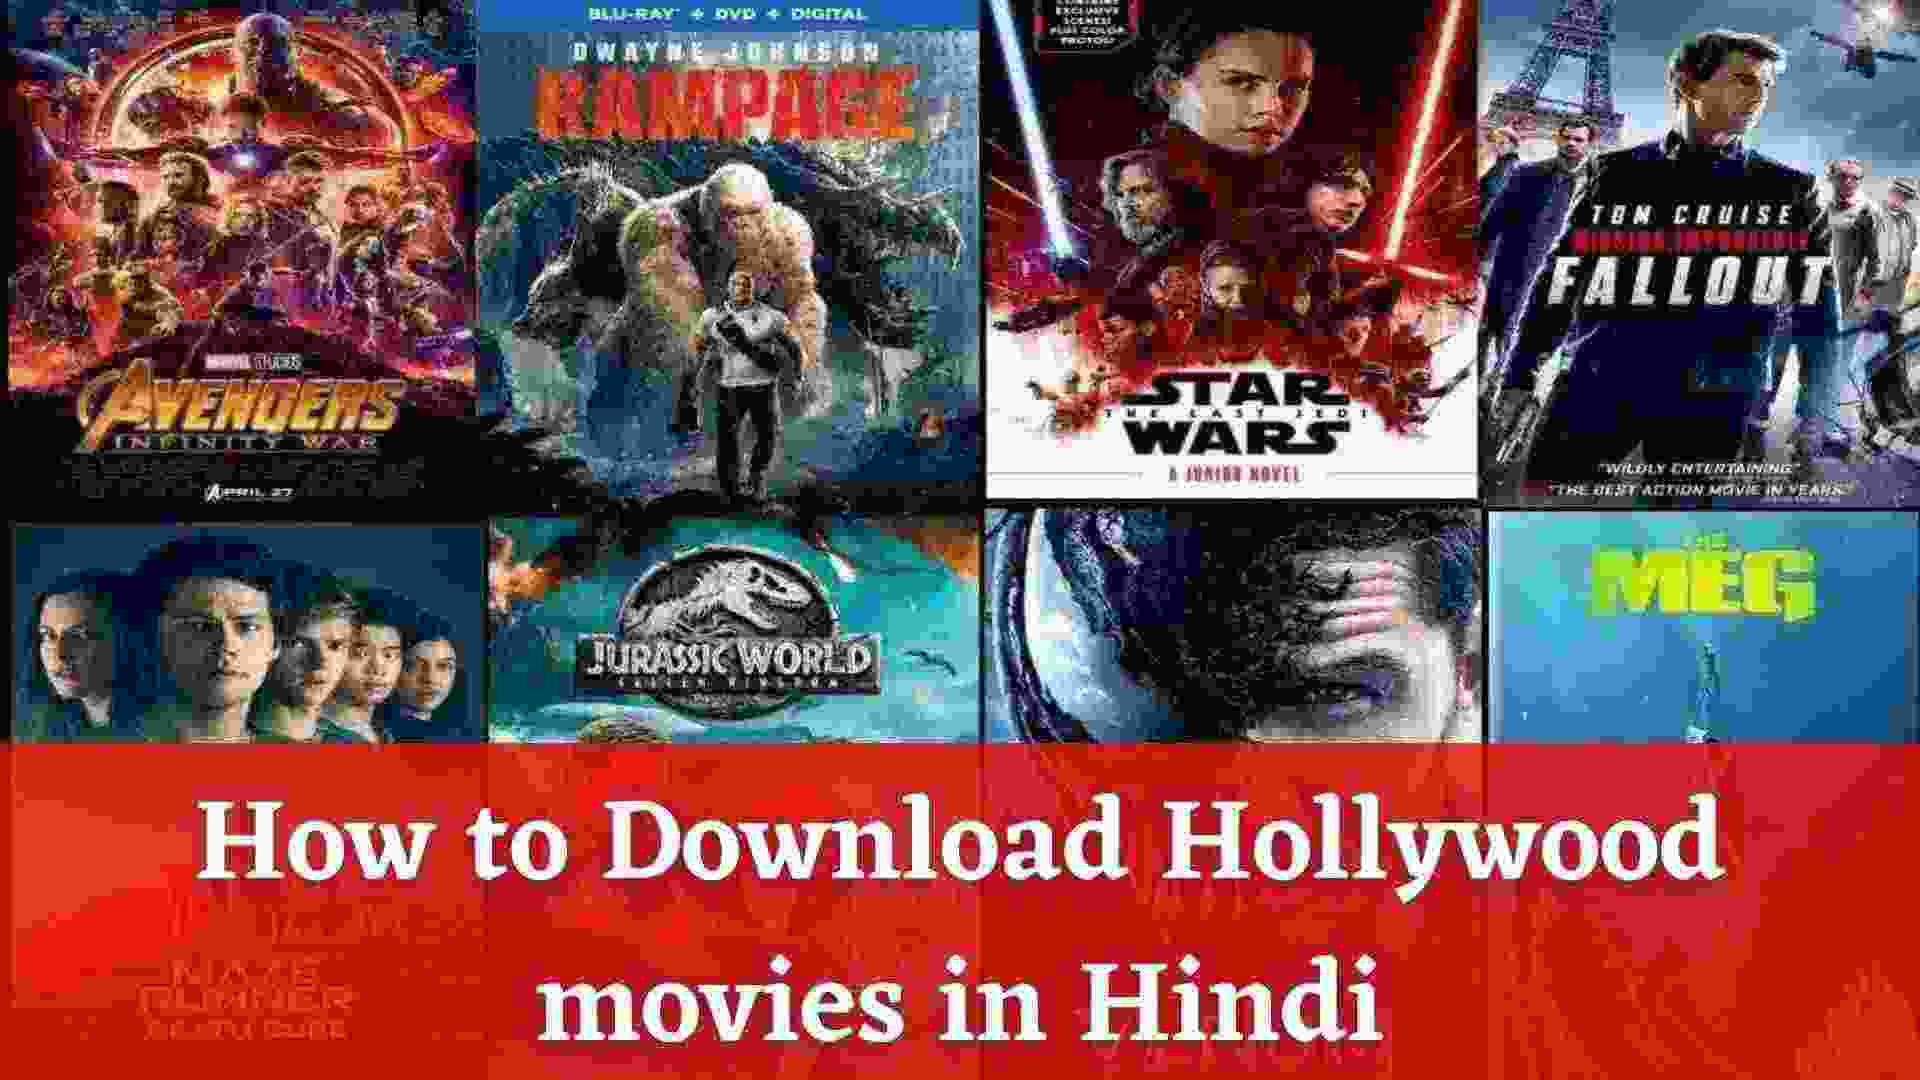 Hindi movie download free website list